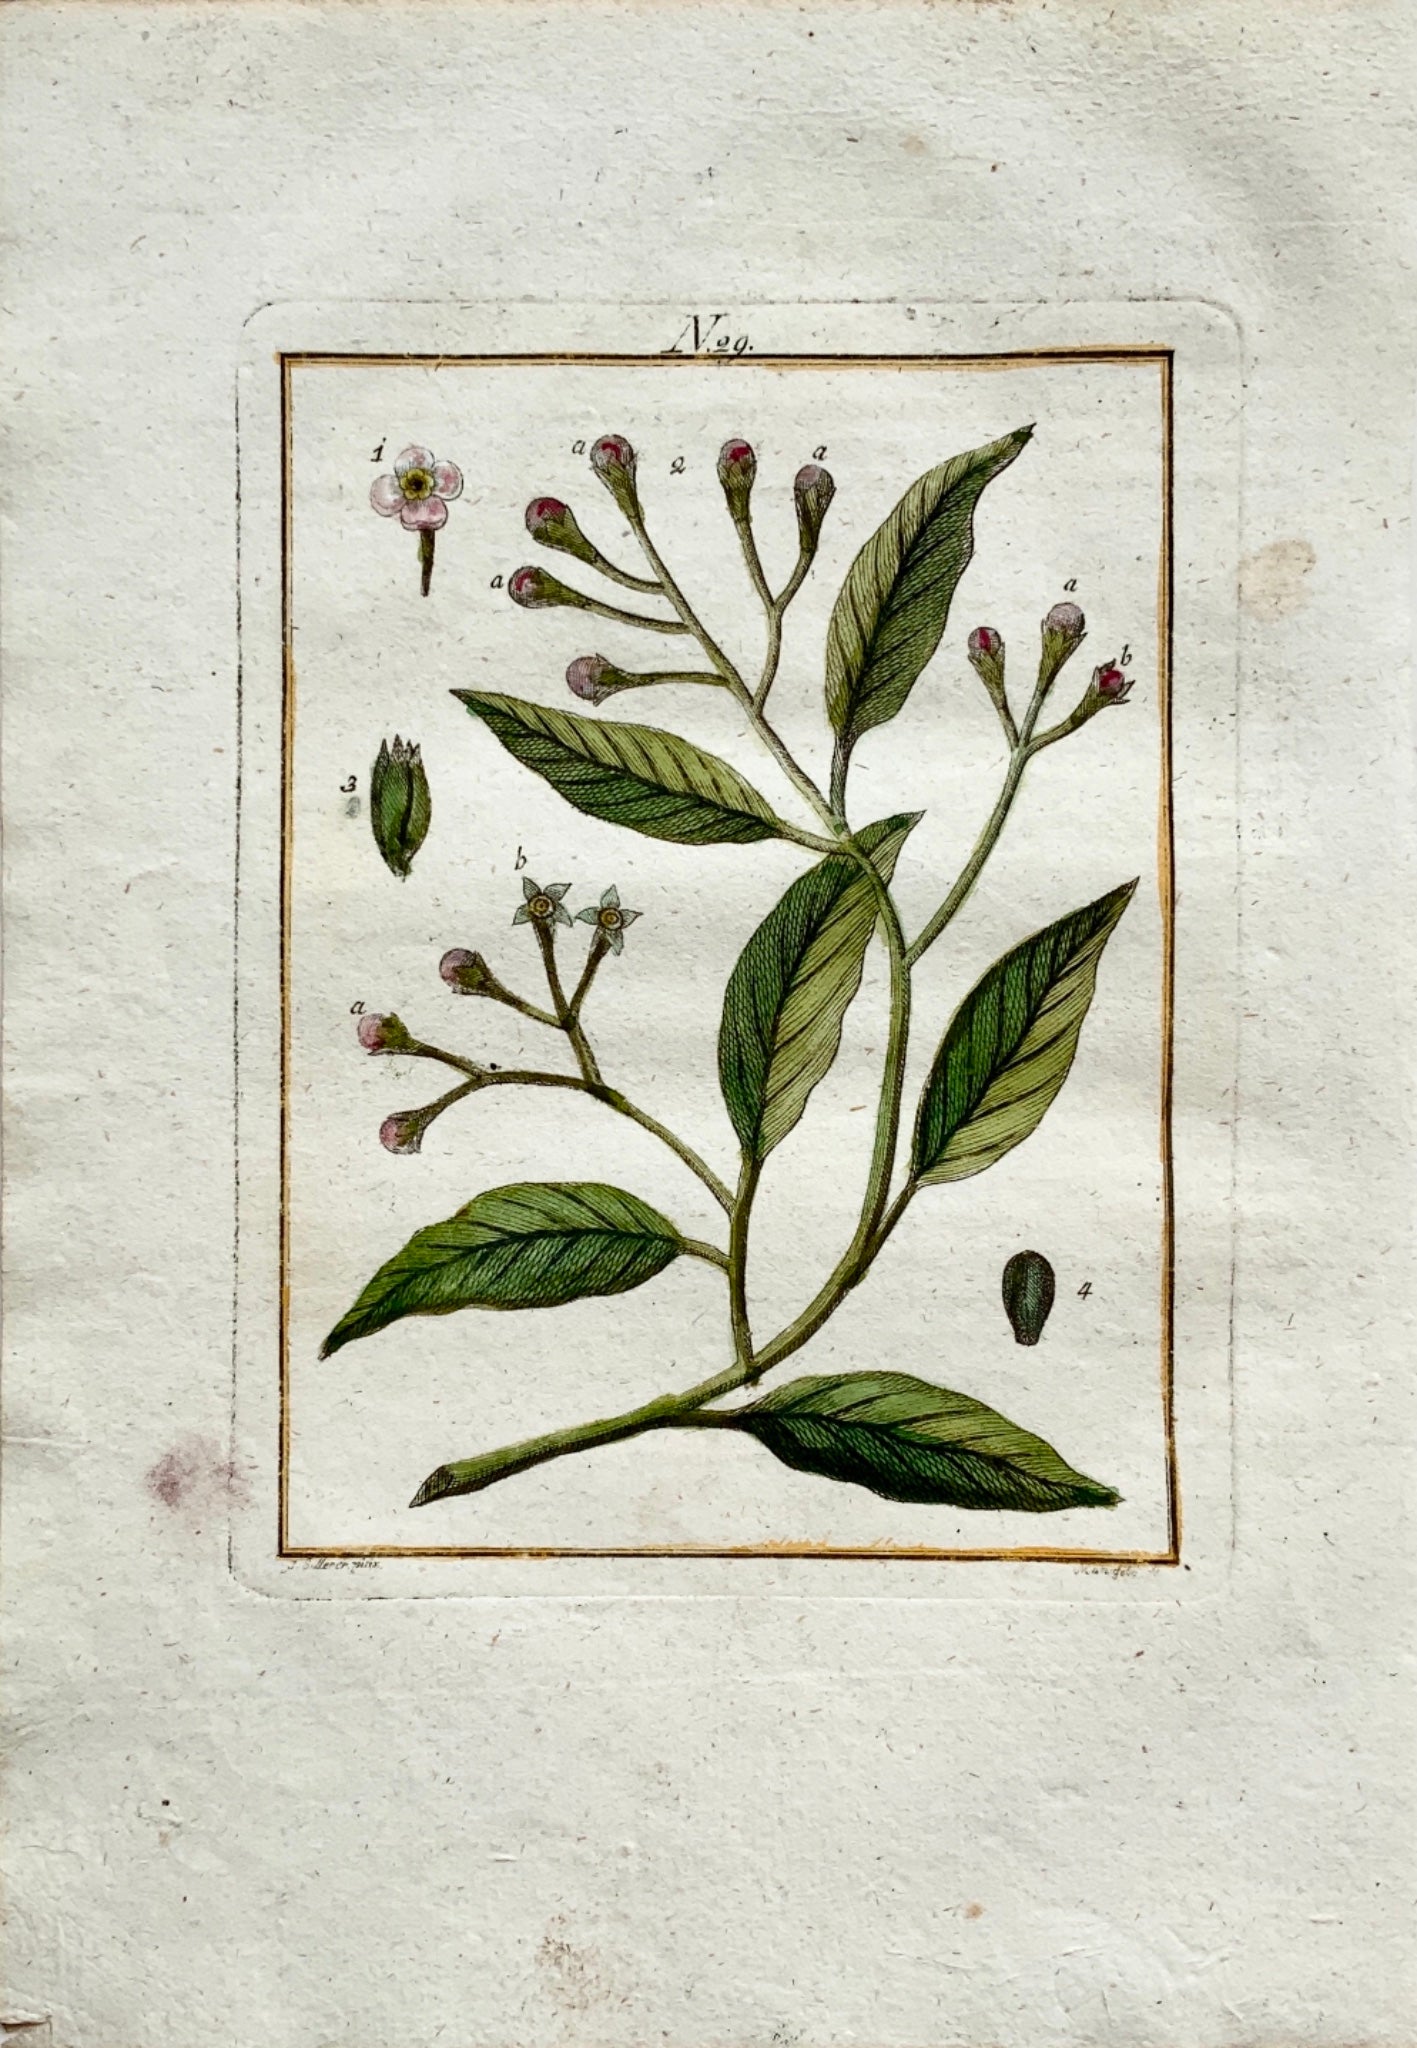 1790 CLOVE - Joh. Sollerer hand coloured engraving - Botany, Spices